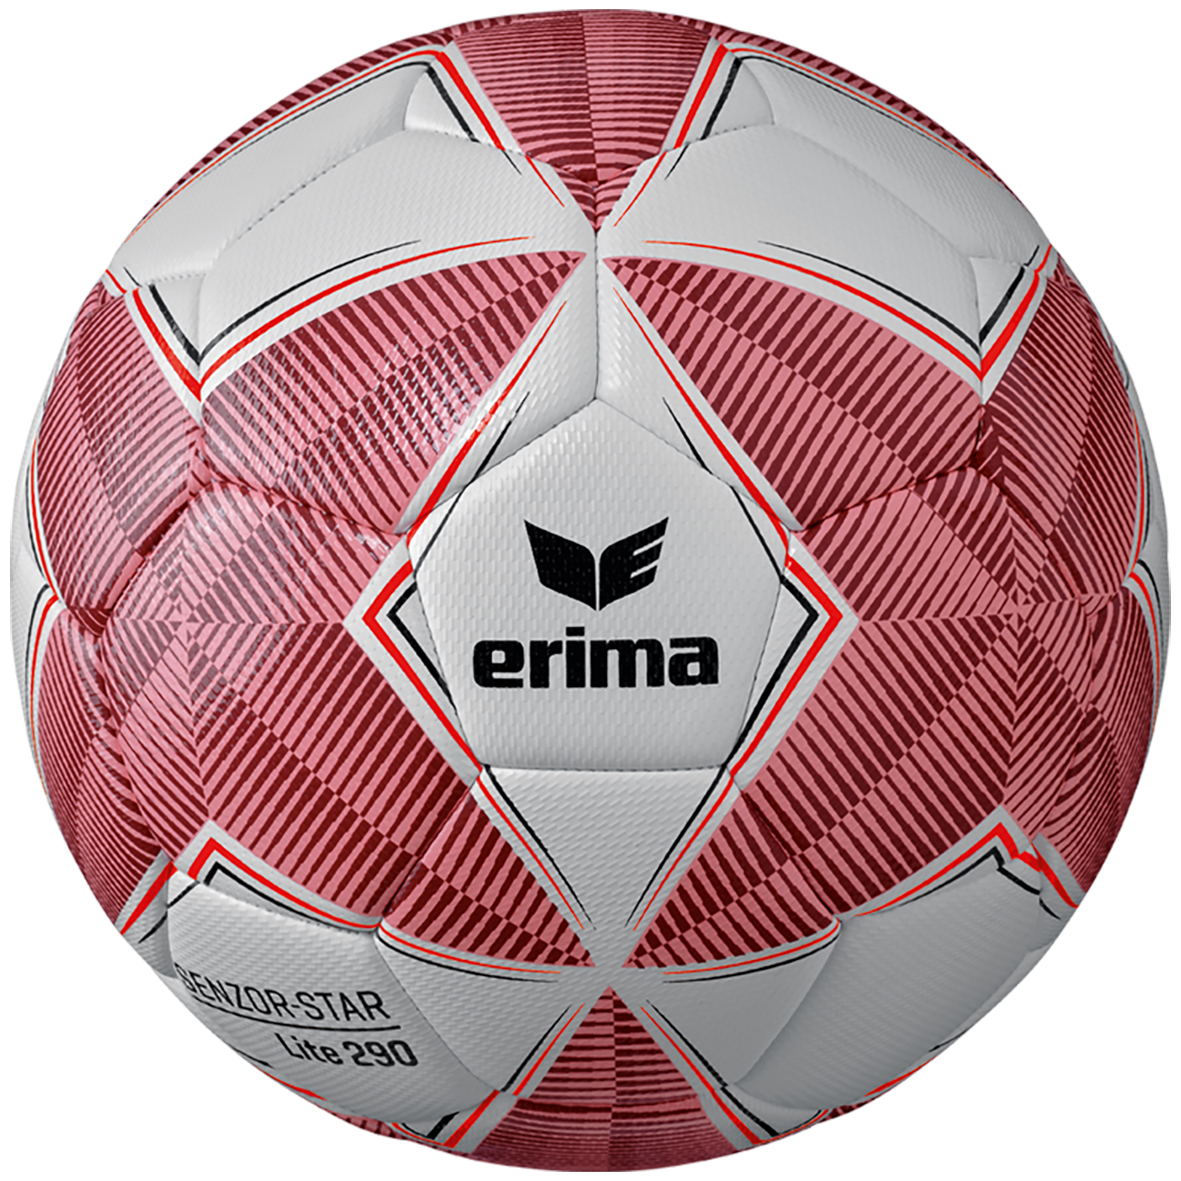 ERIMA SENZOR STAR LITE 290 FOOTBALL, RED-BORDEAUX SIZE 4.